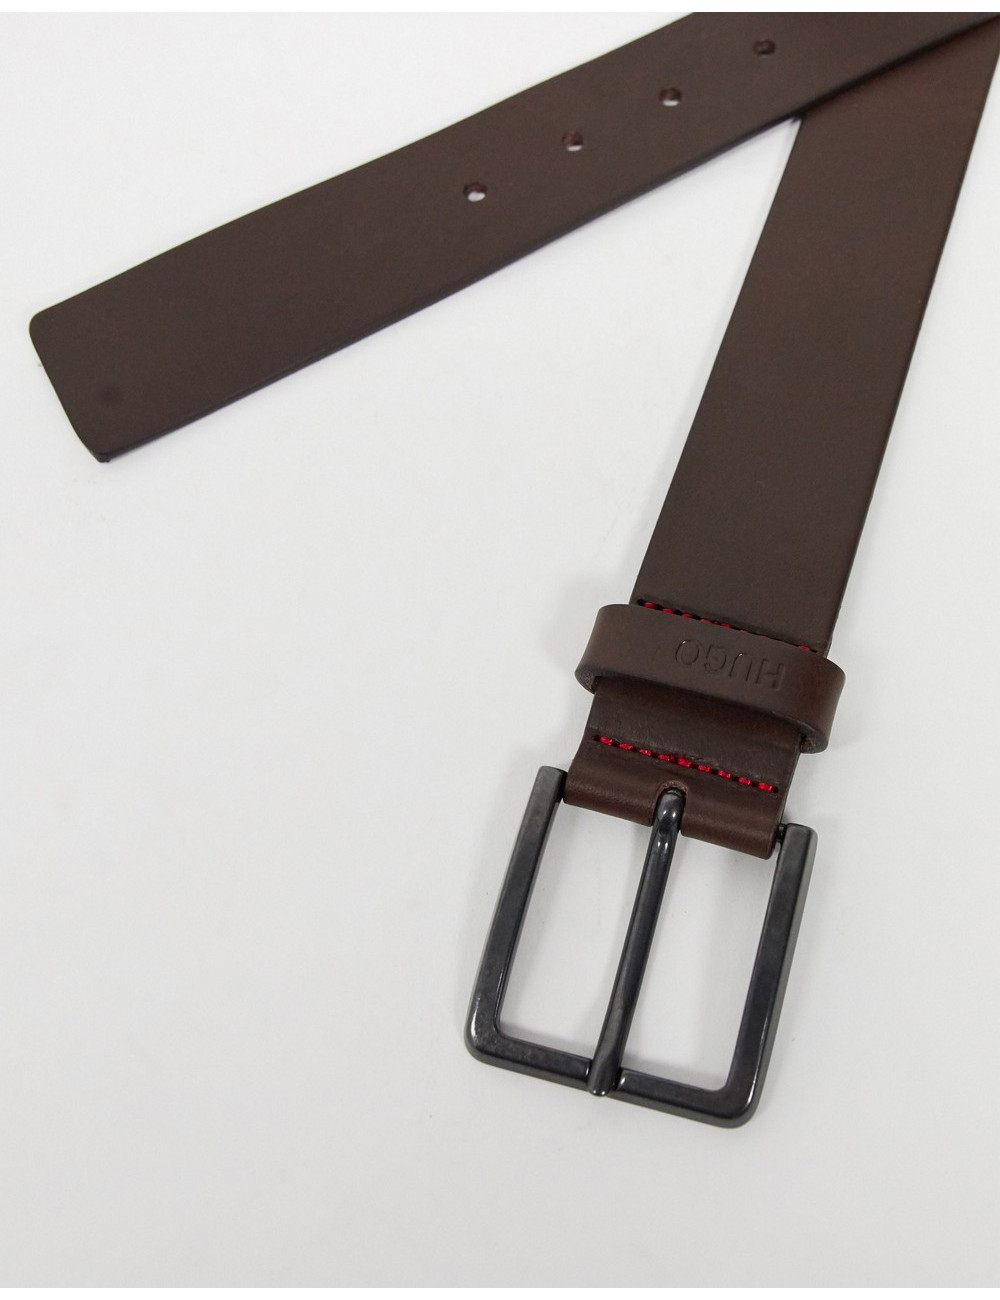 HUGO Gionio leather belt in...